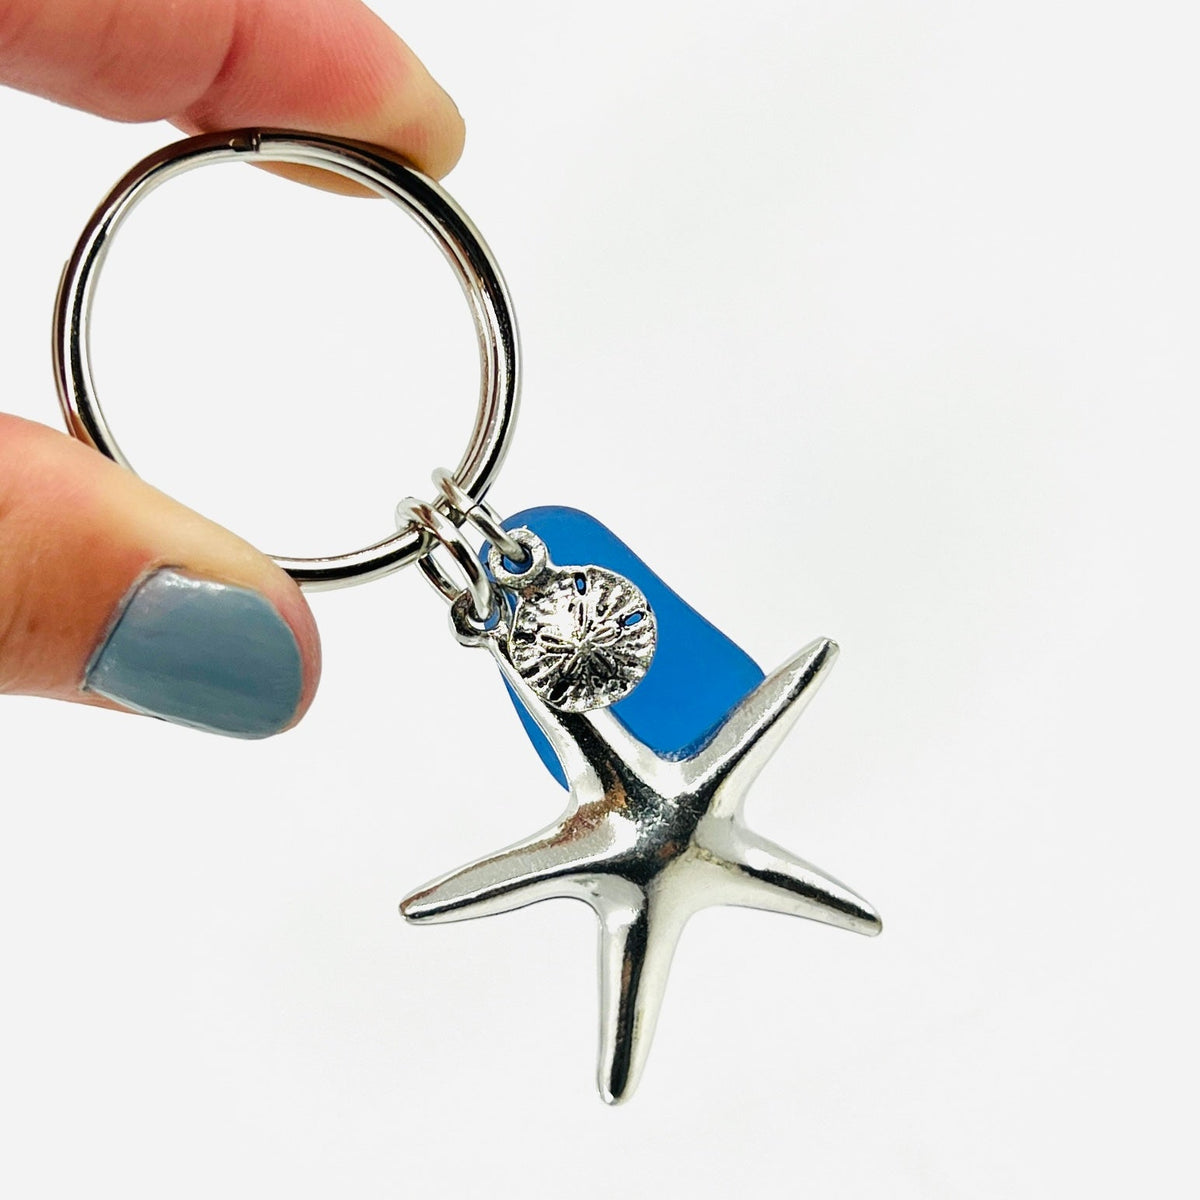 Pewter Sea Star Keychain with Blue Sea Glass Jewelry Basic Spirit 